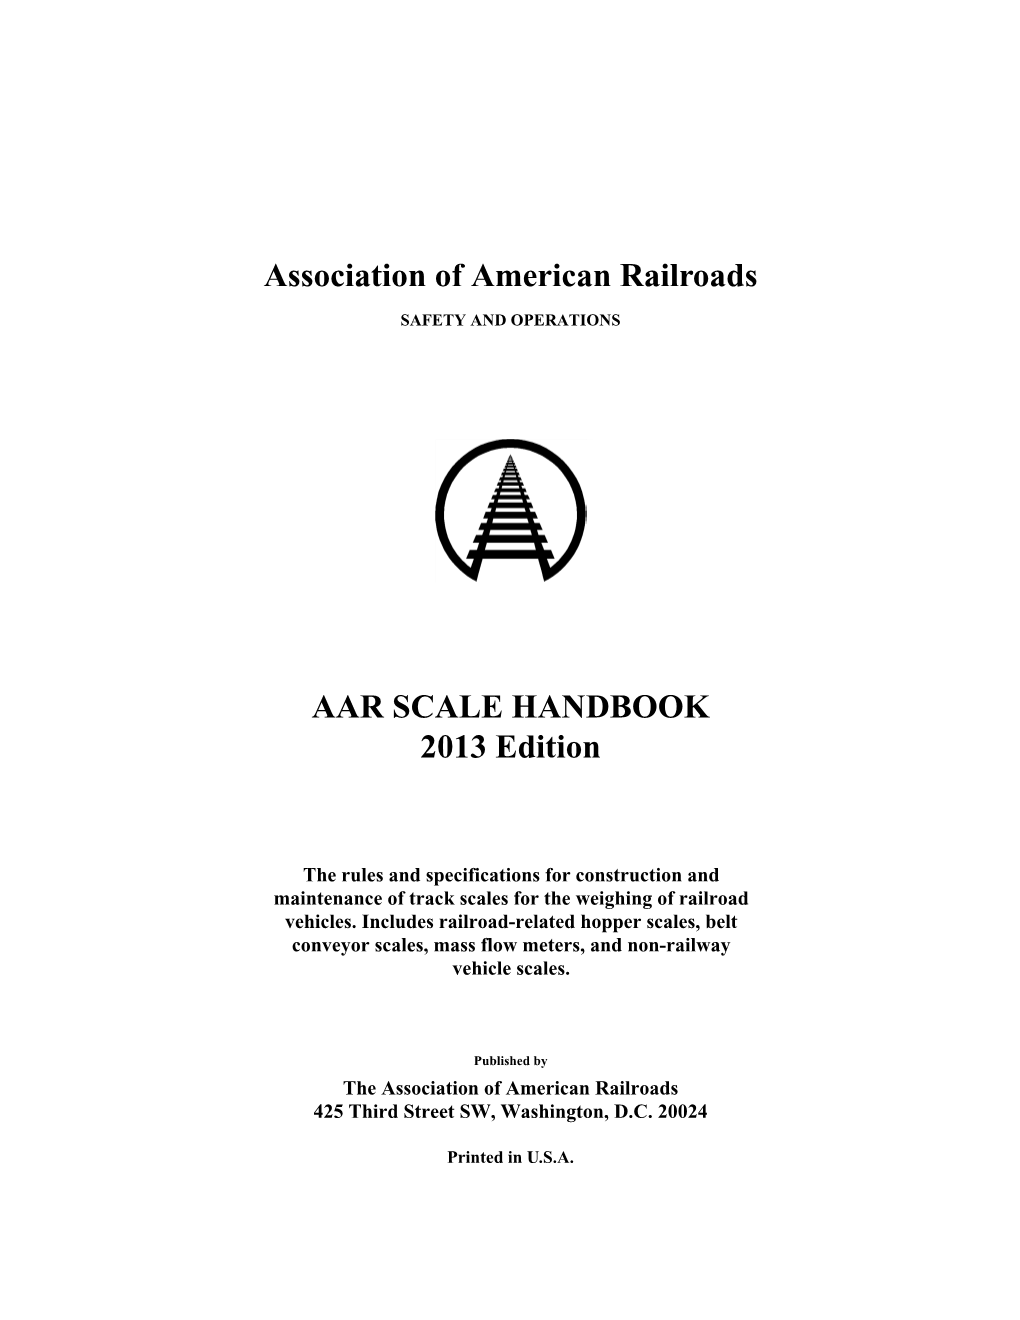 Association of American Railroads AAR SCALE HANDBOOK 2013